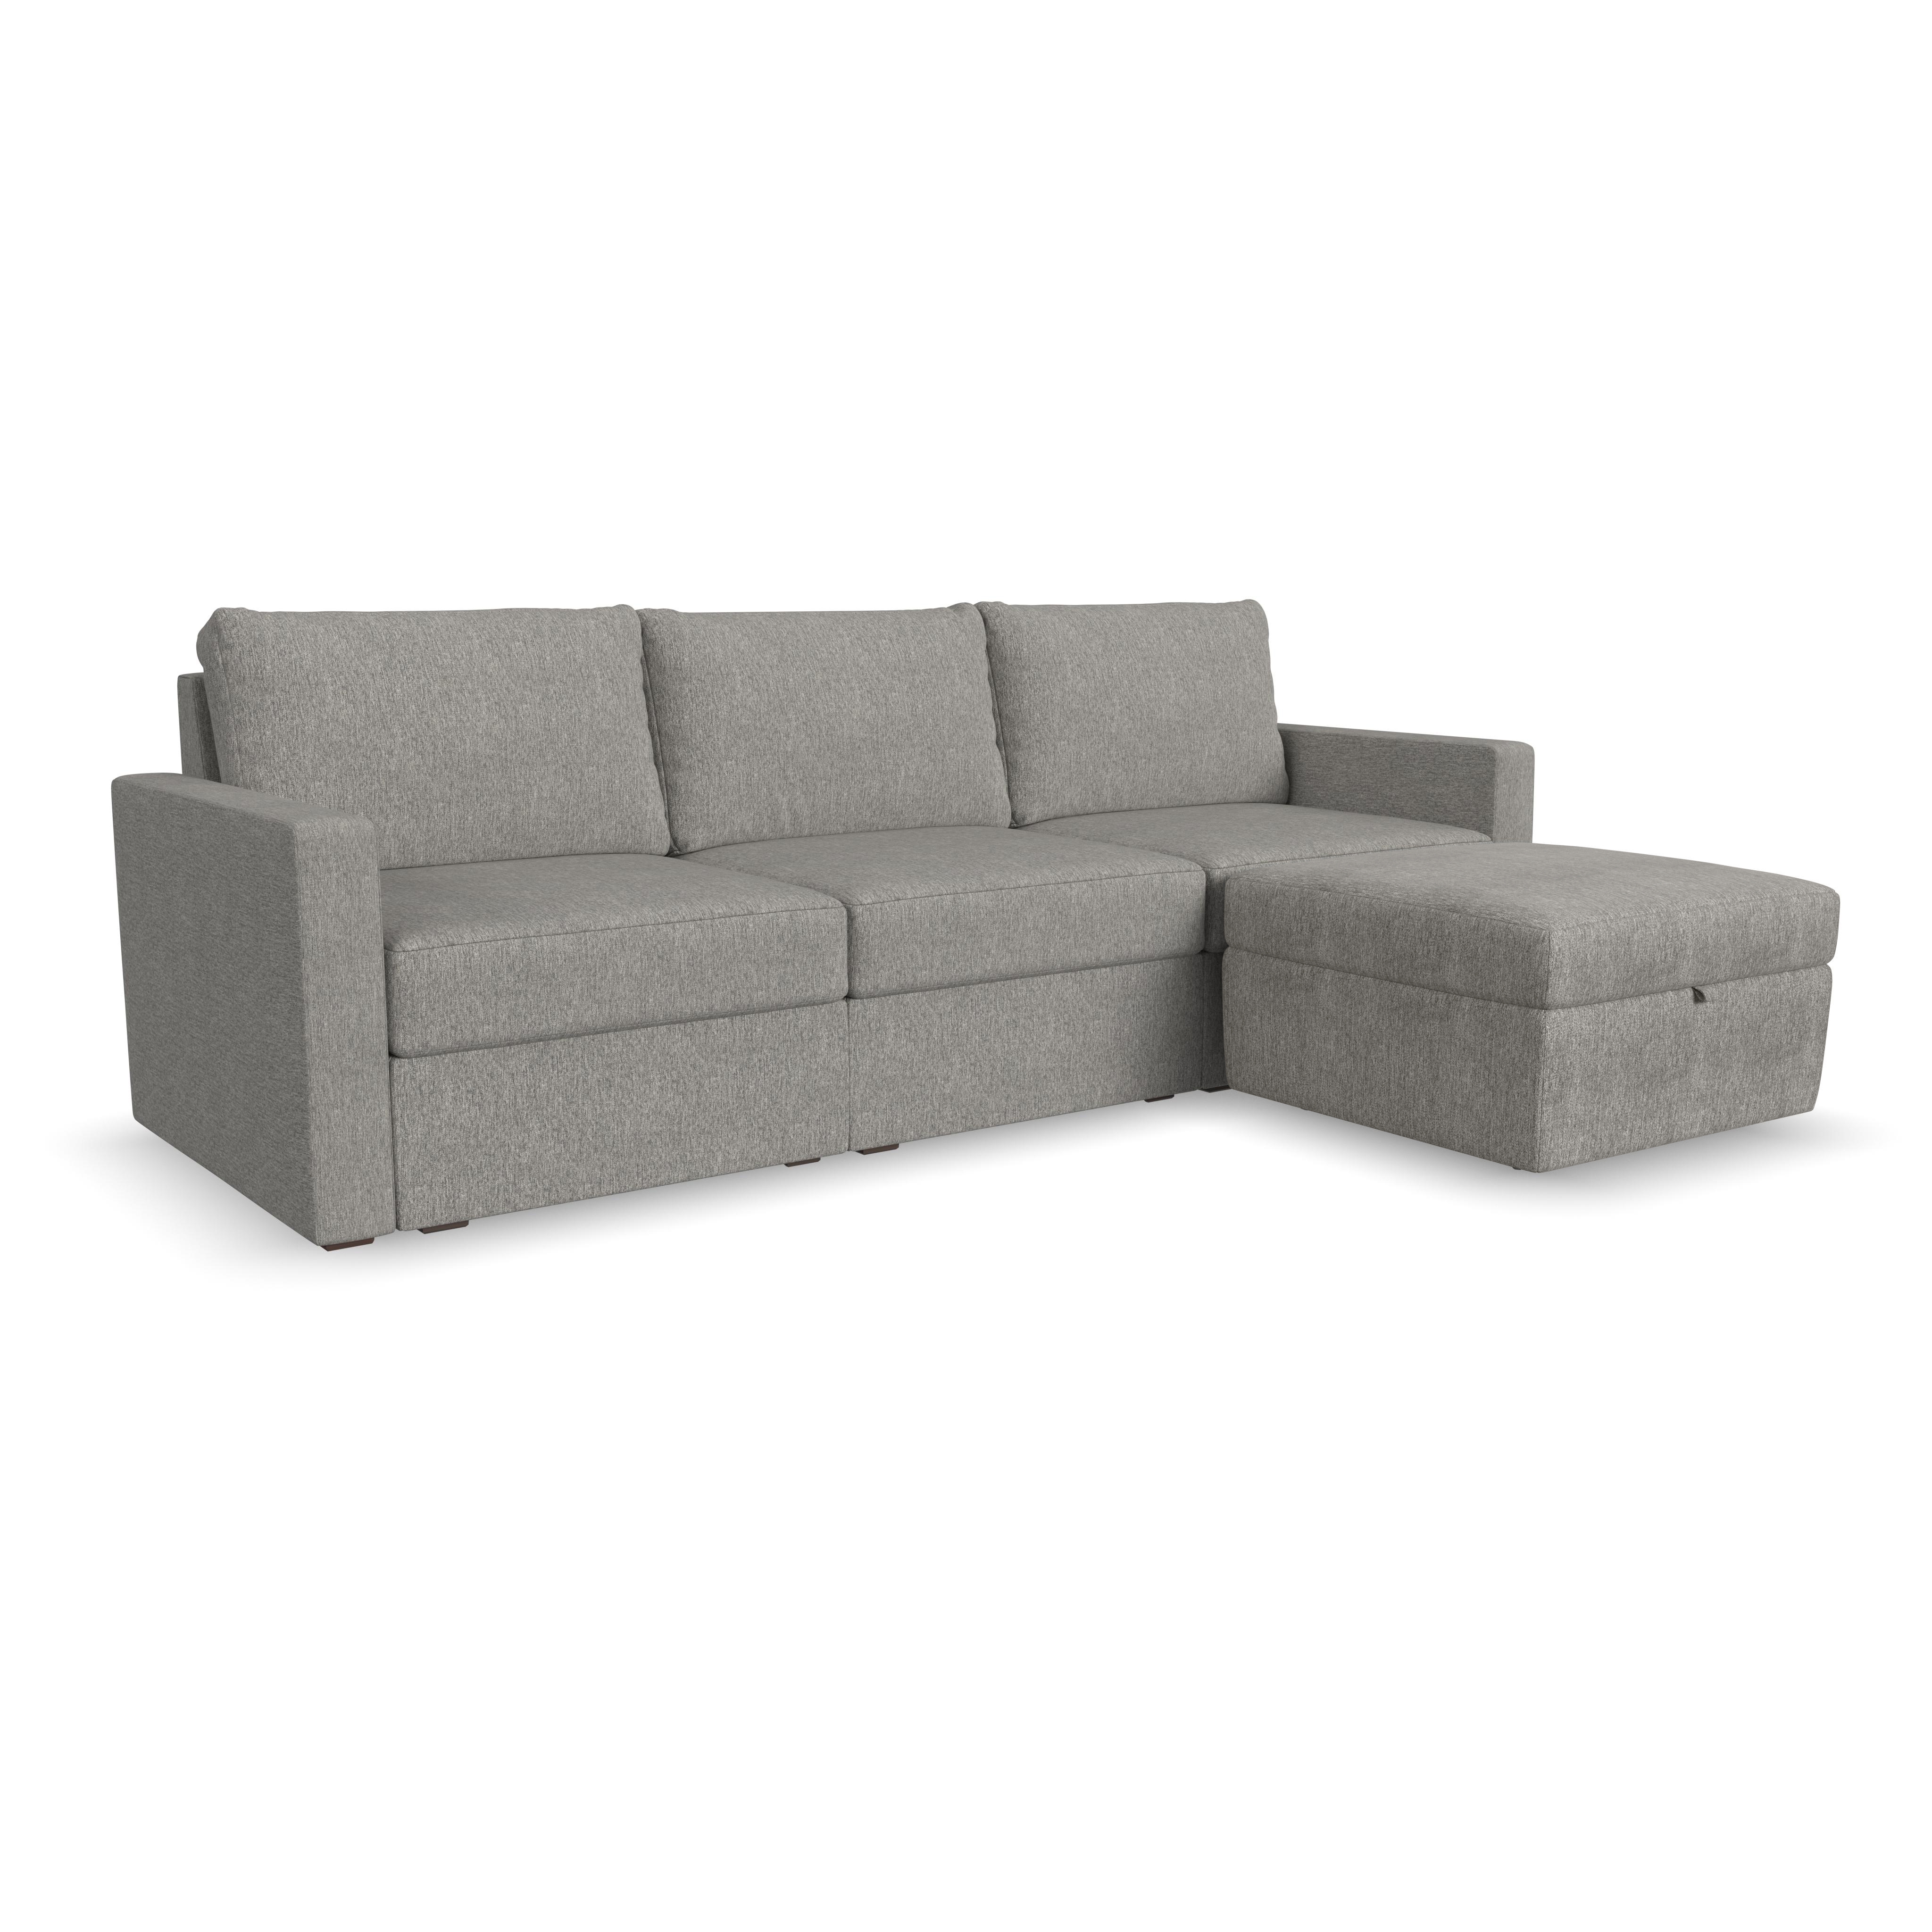 Flexsteel Flex Sofa with Standard Arm and Storage Ottoman